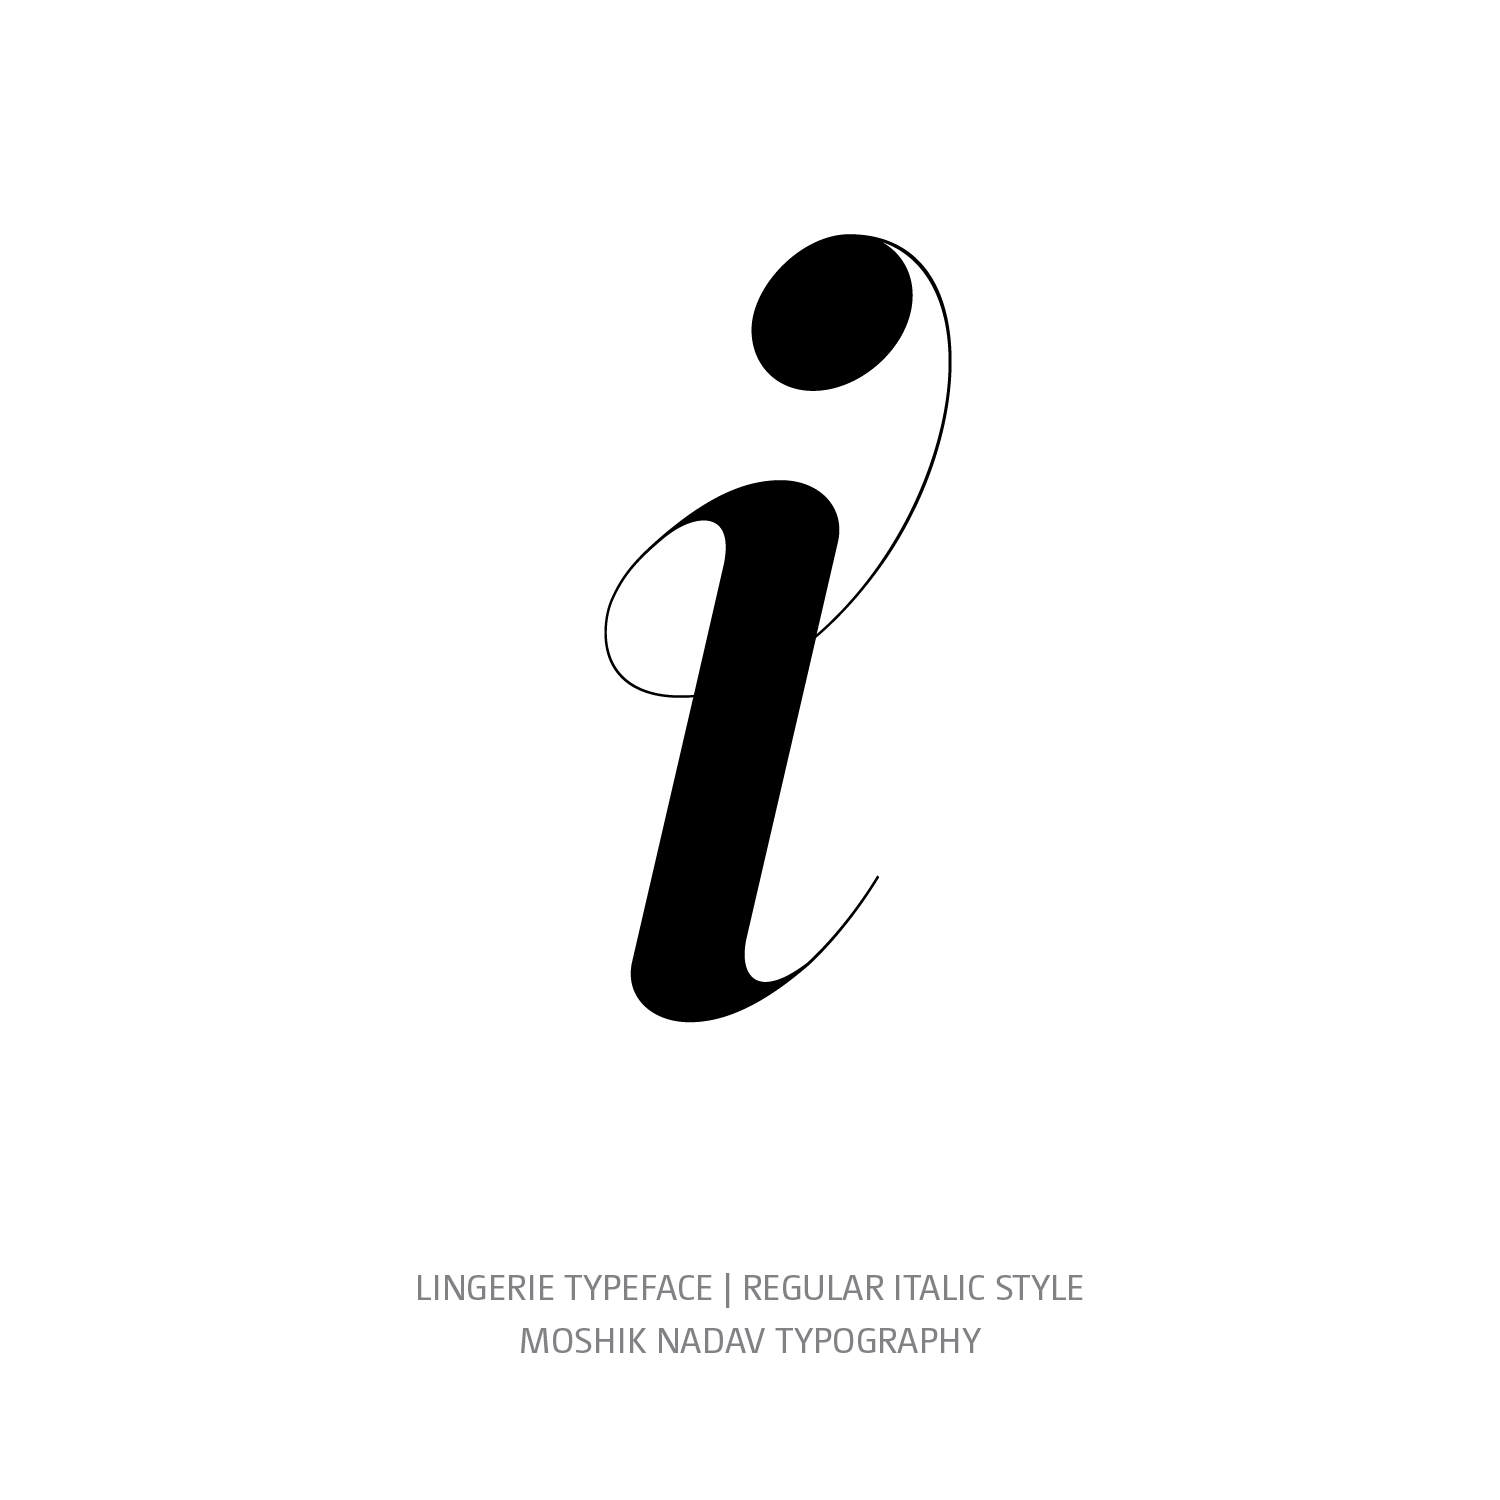 Lingerie Typeface Regular Italic i - Fashion fonts by Moshik Nadav Typography